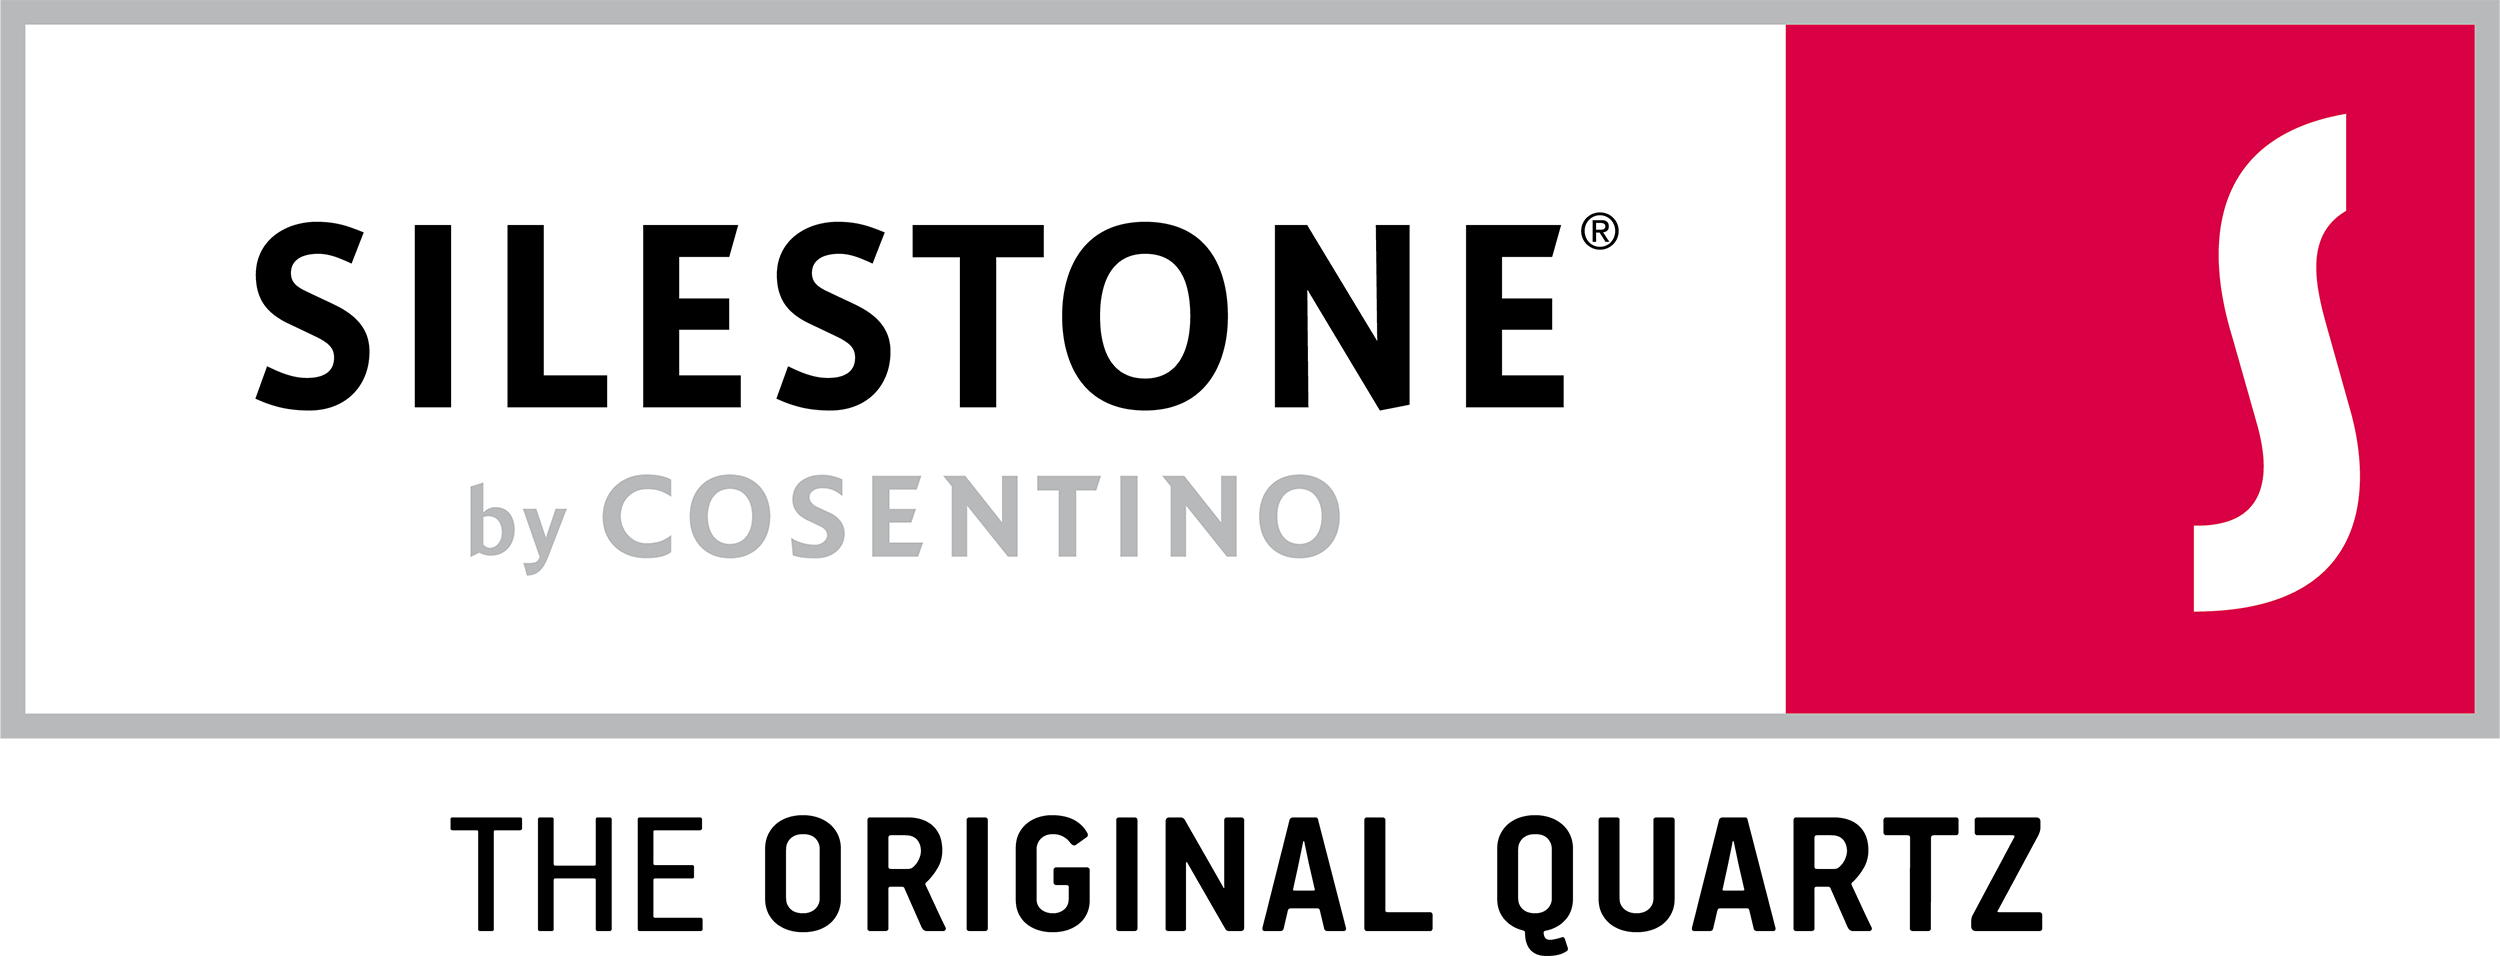 silestone-logo